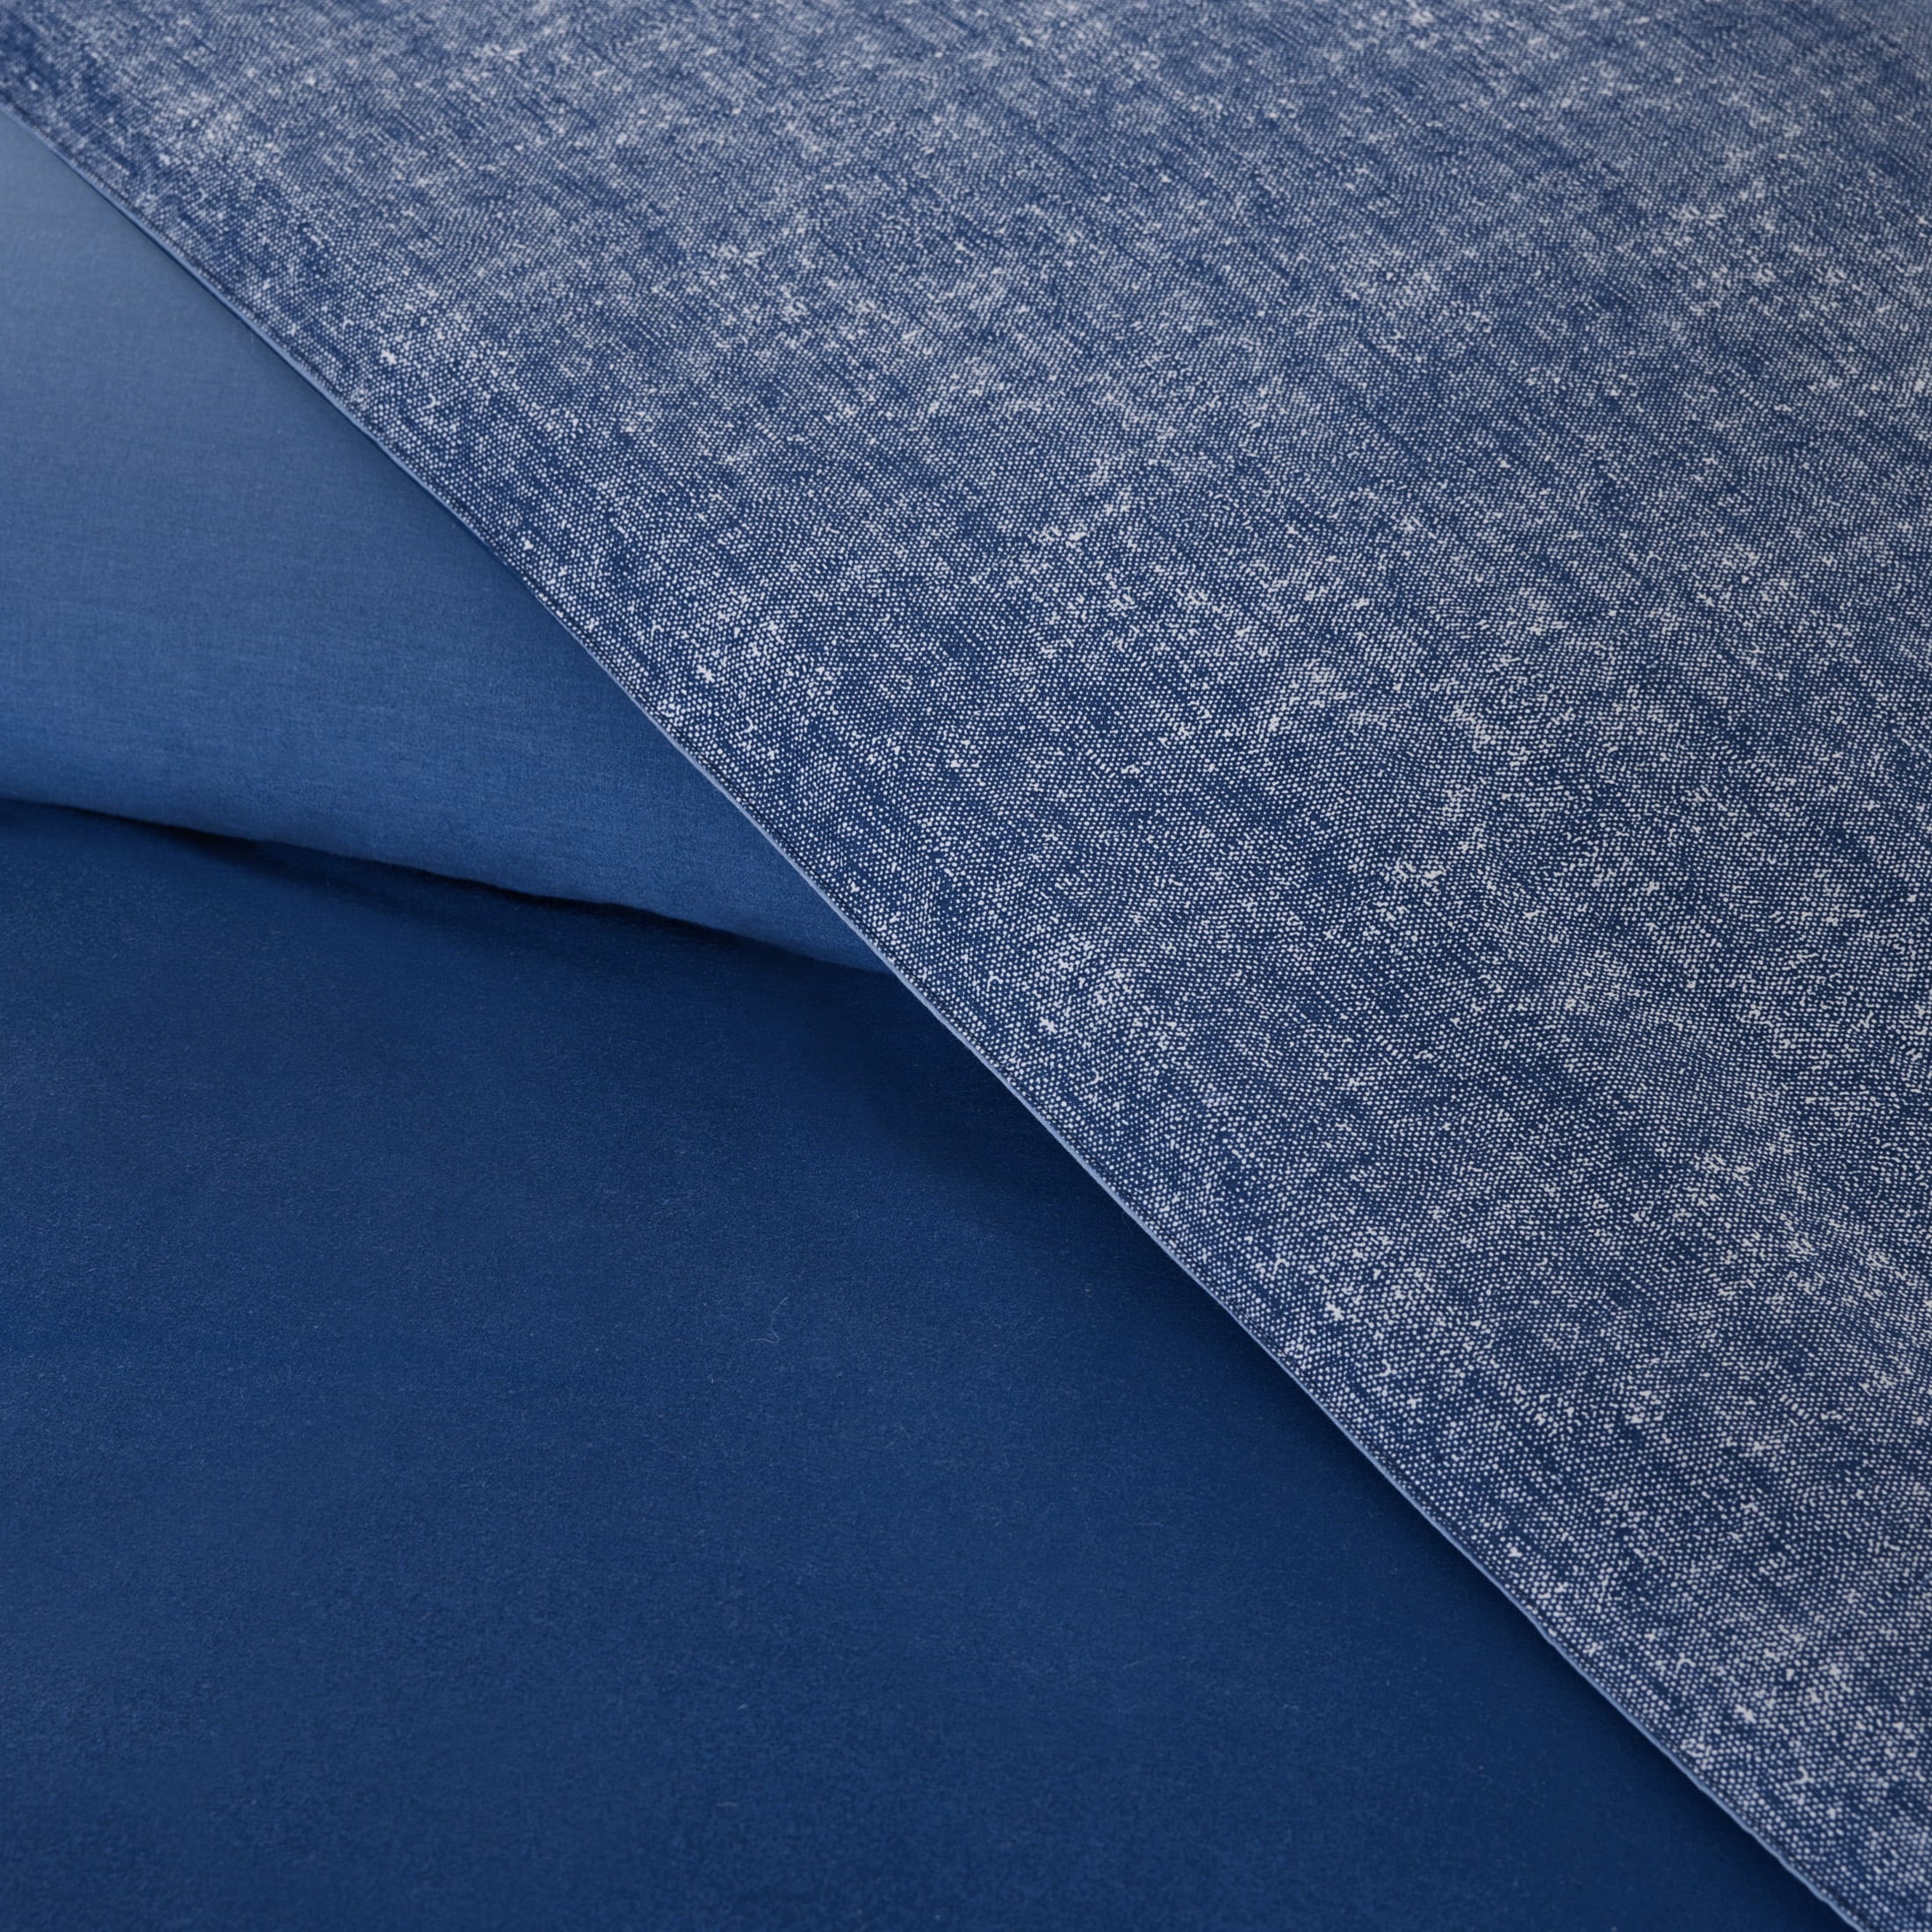 Gap Home Ombre Reversible Organic Cotton Blend Comforter Set, King, Blue, 3-Pieces